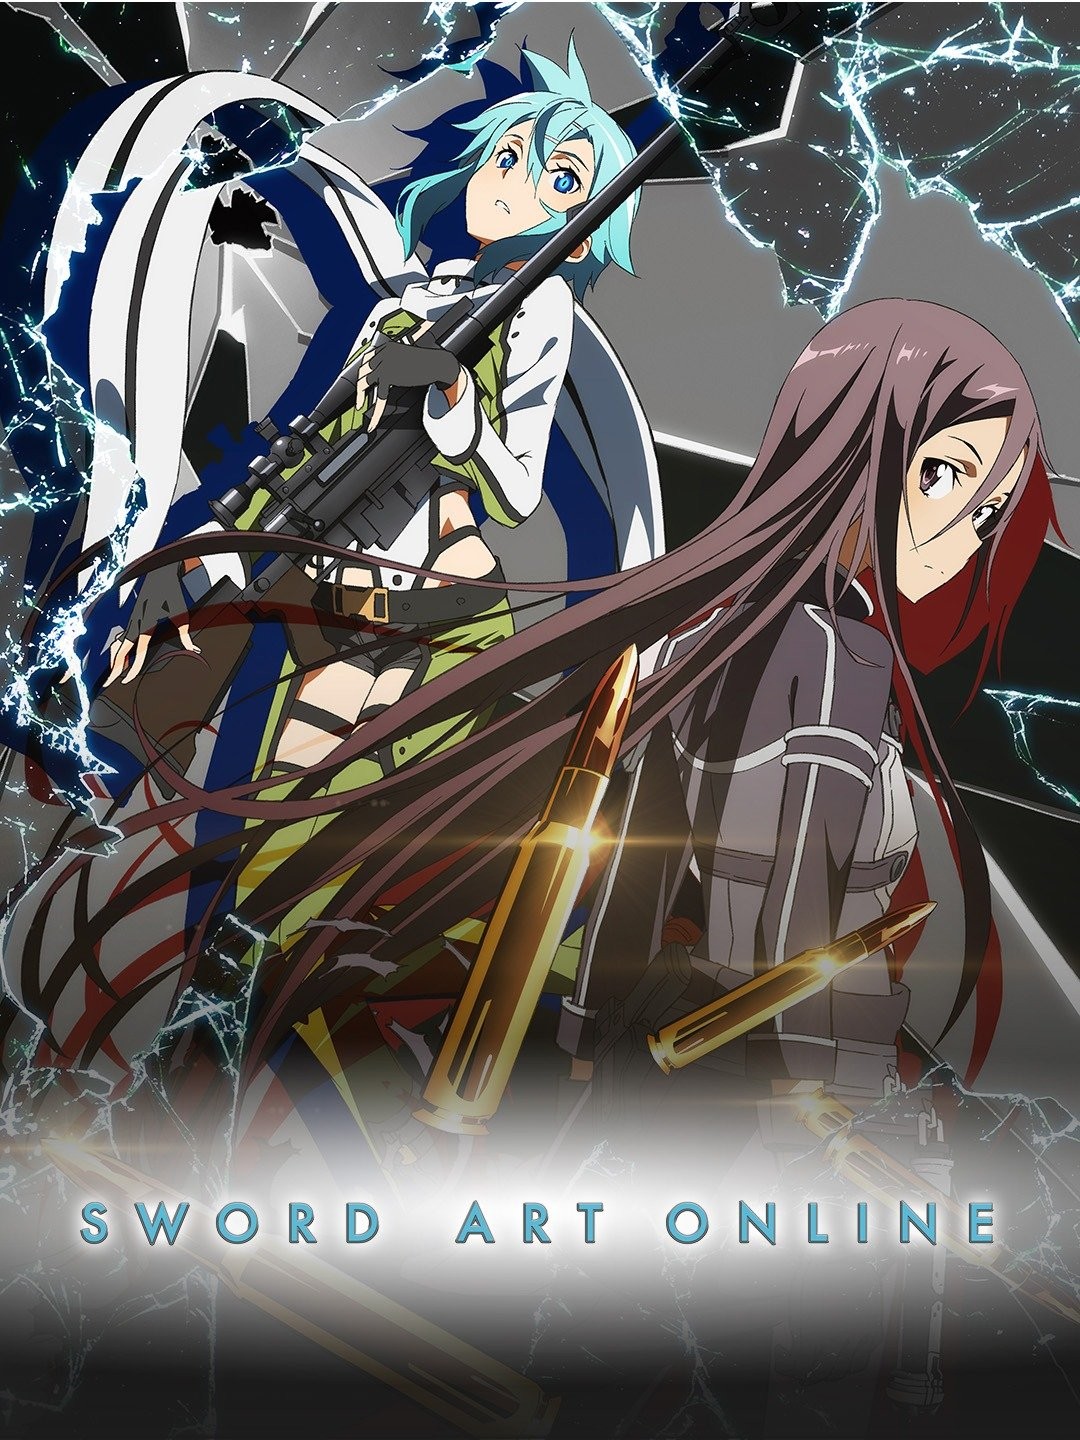 Bộ 6 Áp phích - Poster Anime Sword Art Online - Đao Kiếm Thần Vực (bóc dán)  - A3,A4,A5 | Lazada.vn